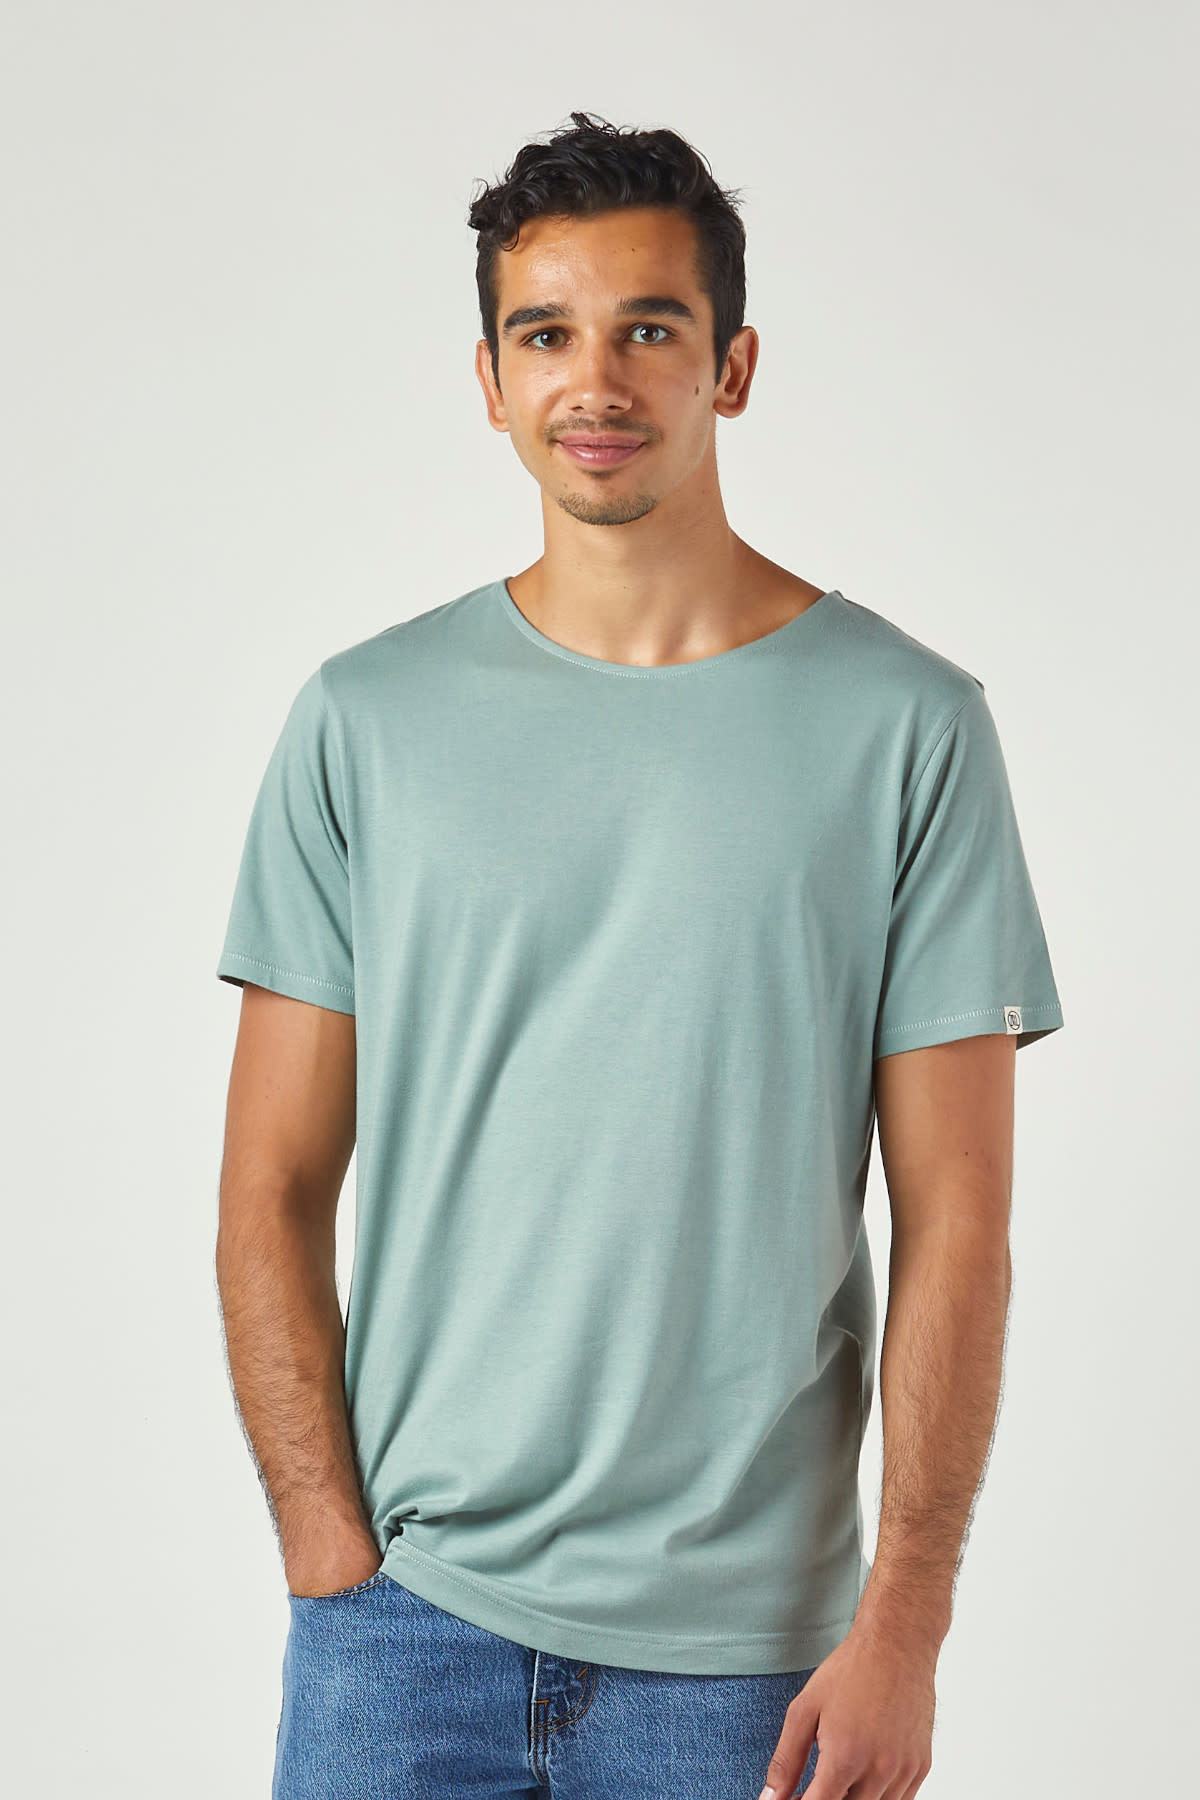 ZRCL ZRCL, Basic Loose T-Shirt, light green, S